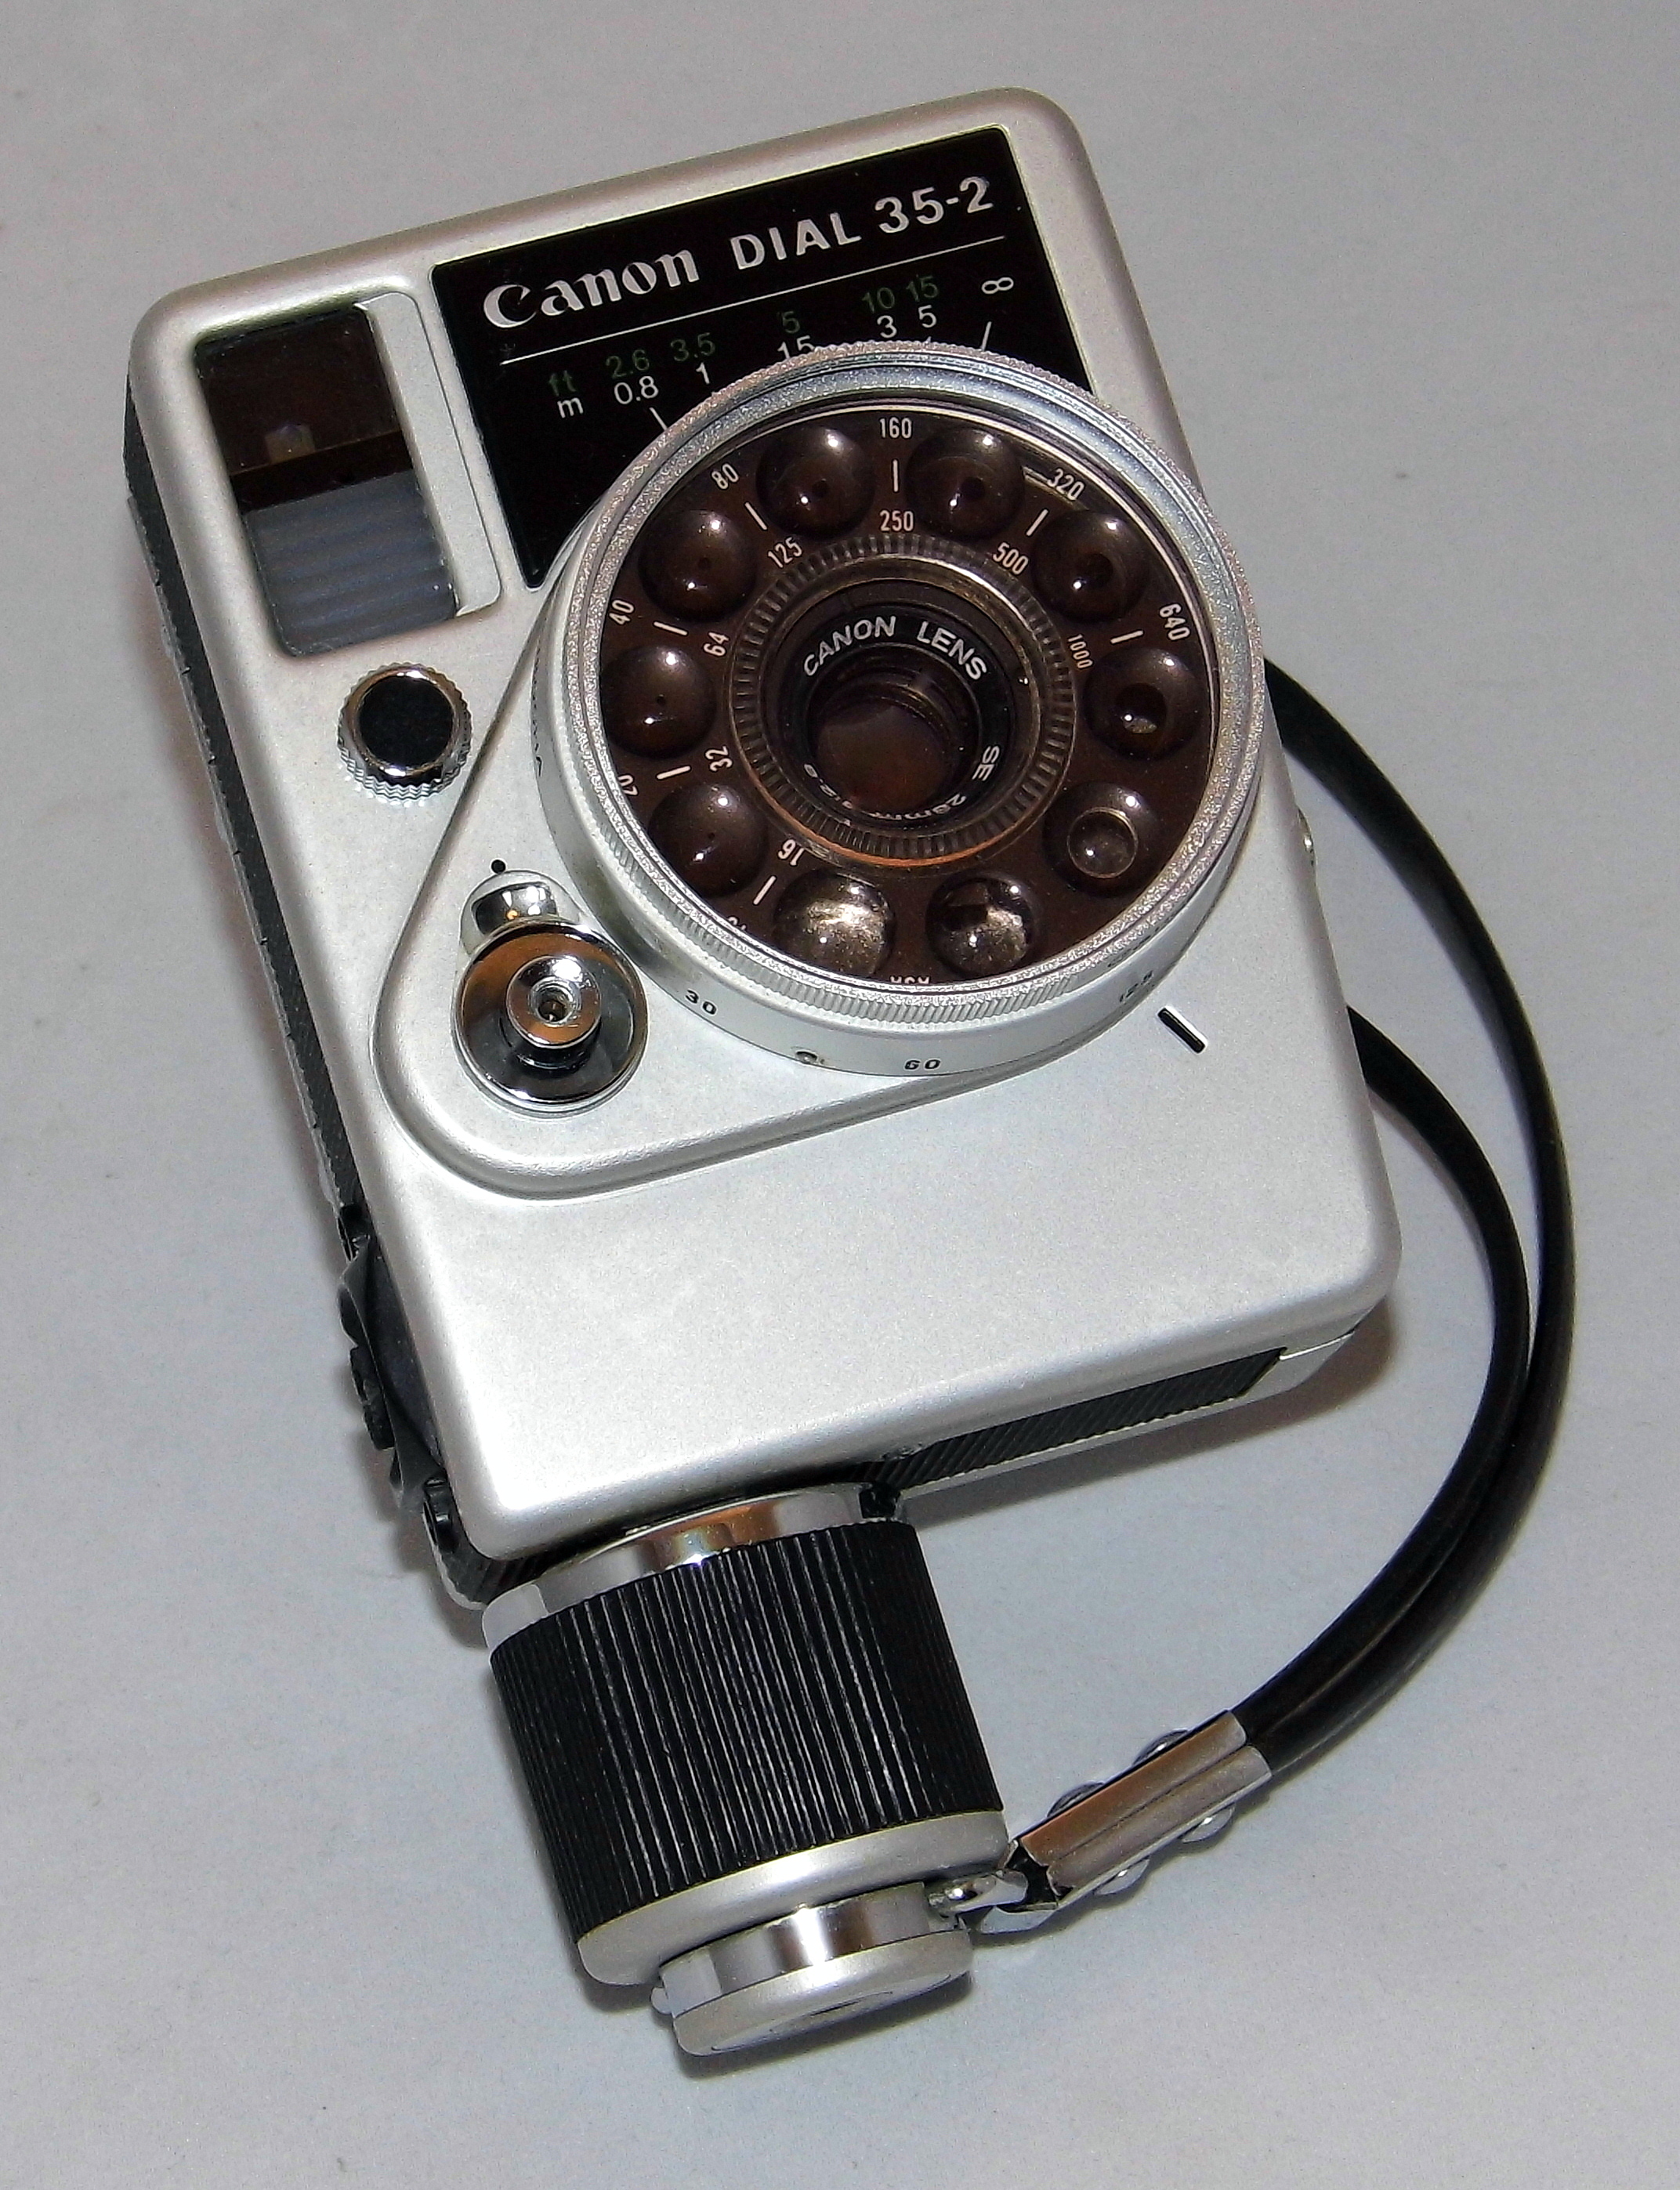 Vintage Cannon Dial 35-2 35mm Lens-Shutter Half-Frame Film Camera, Made In Japan, Circa 1968 (22883988411)